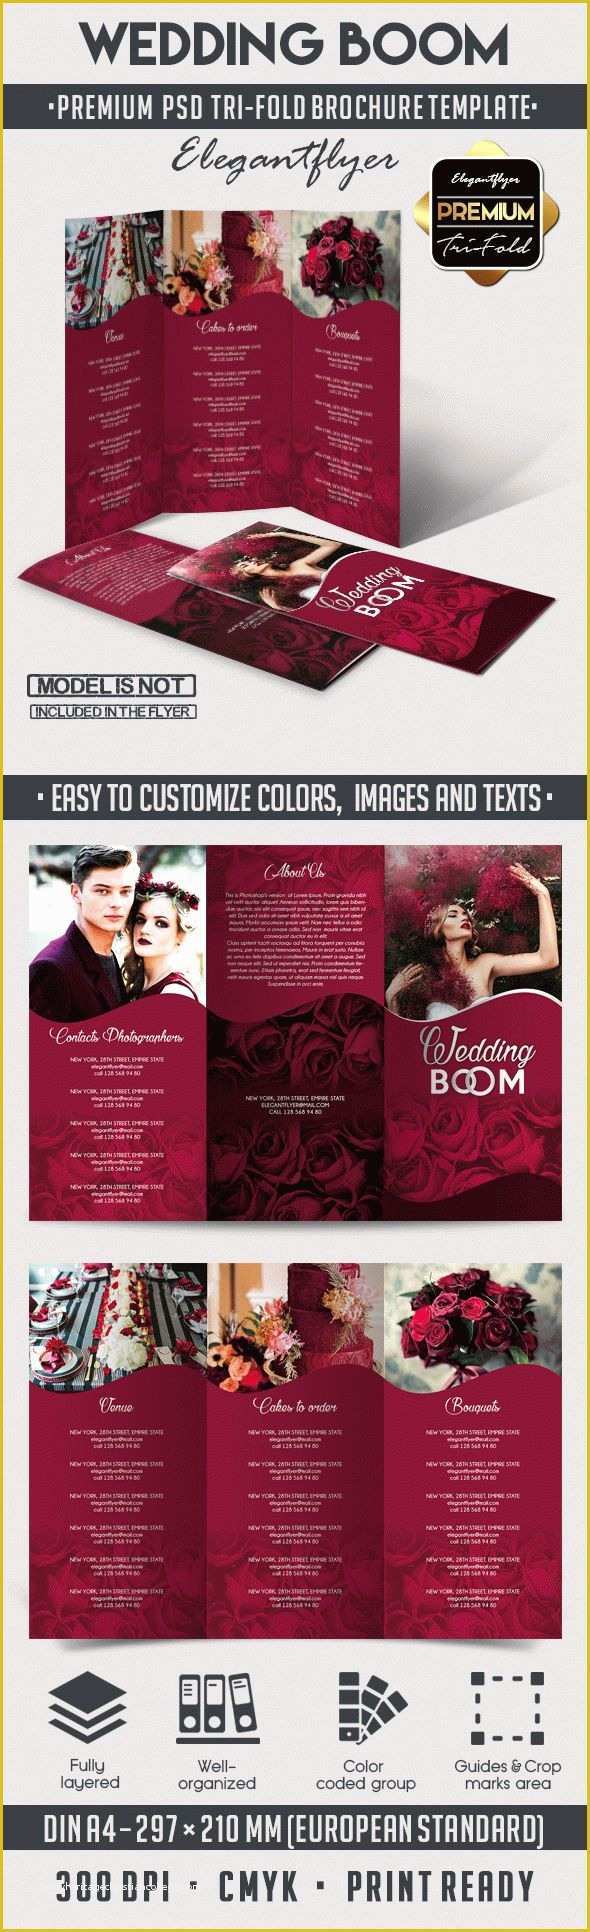 Free Tri Fold Wedding Brochure Templates Of Wedding Boom – Tri Fold Brochure Psd Template – by